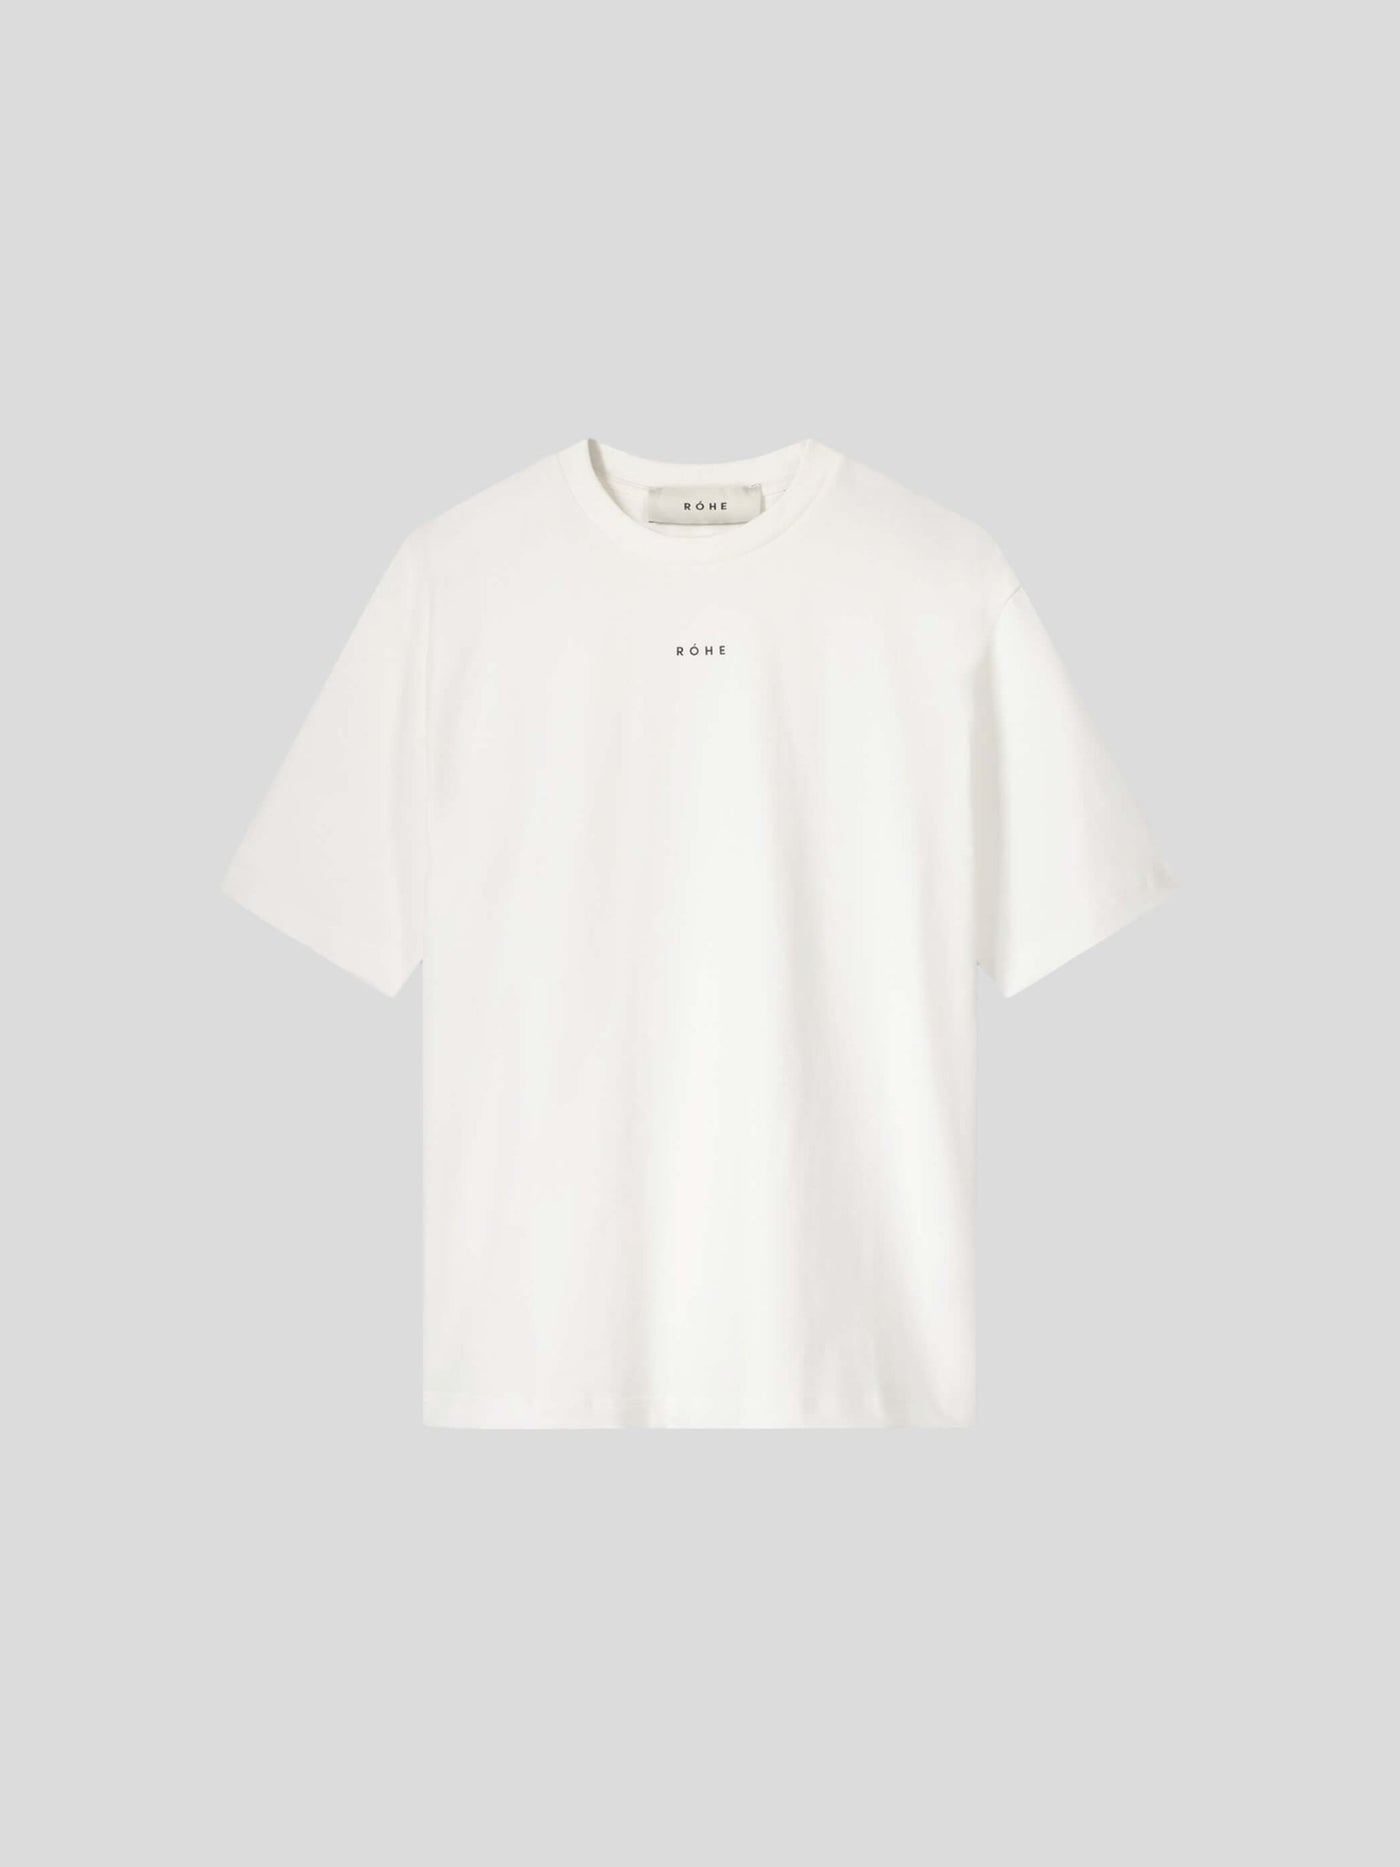 RÓHE Shirts & Polos | T-Shirt FREYE in weiß | 301-22-024-112 white / ADAM/EVE